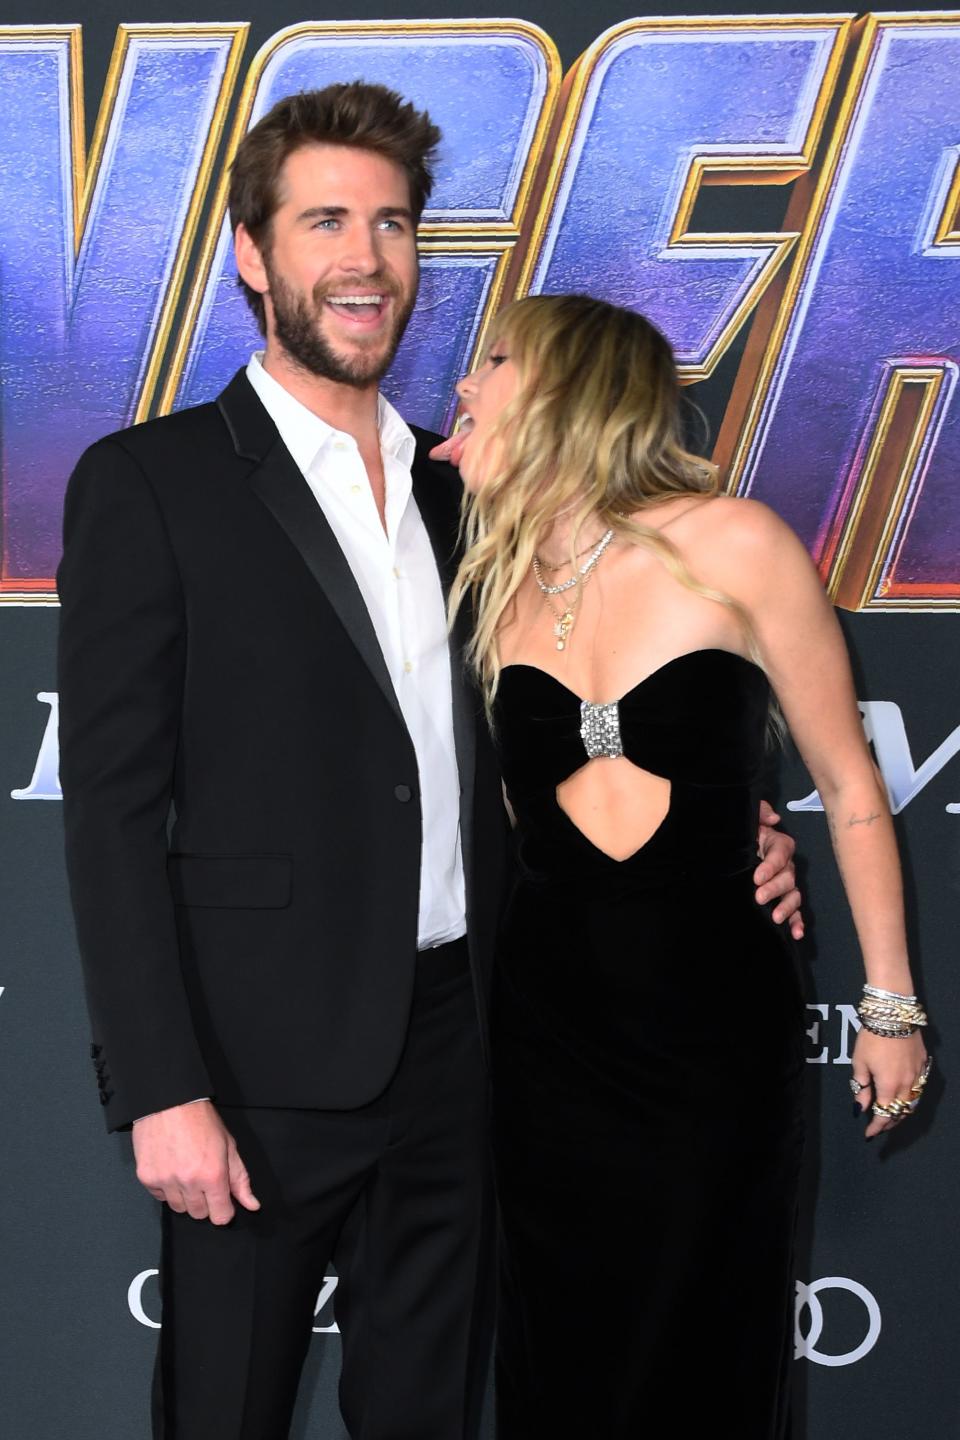 Liam Hemsworth laughs as Miley Cyrus licks him at the Endgame premiere